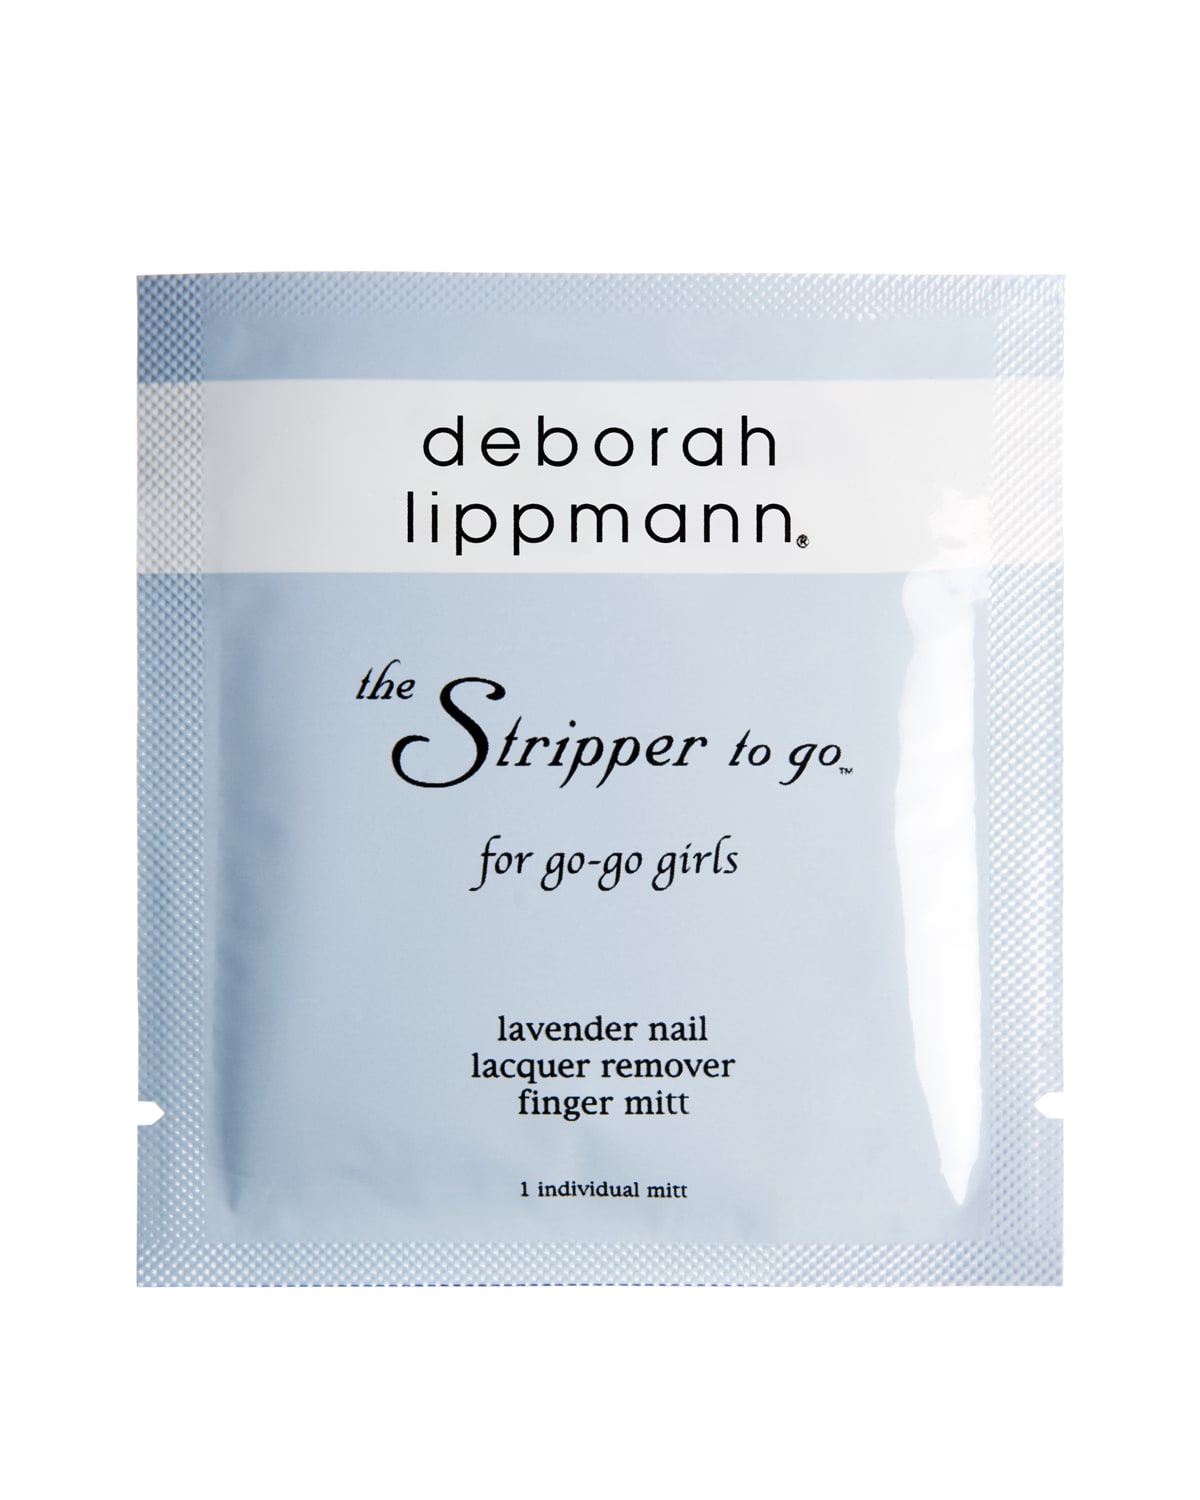 Deborah Lippmann The Stripper Lavender Nail Lacquer Remover To Go